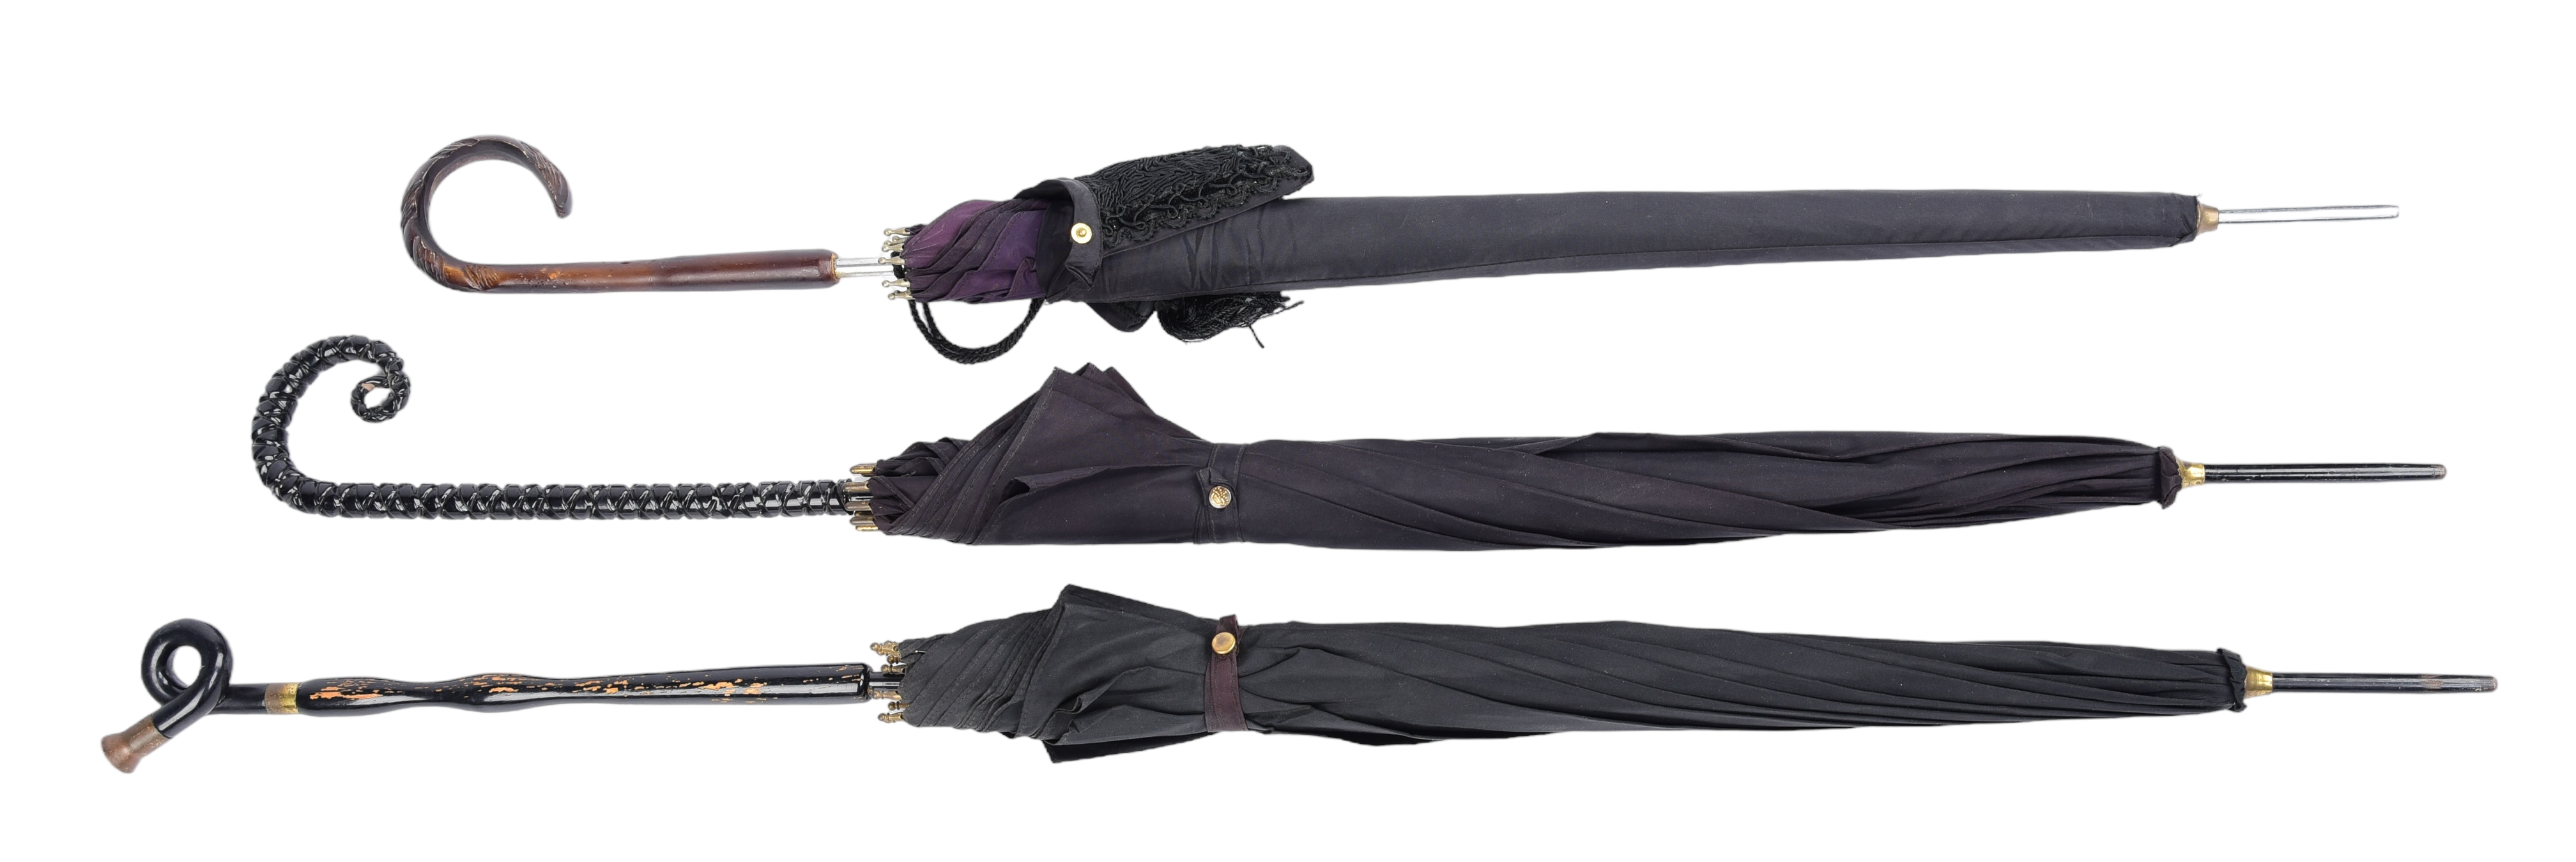  3 Black Victorian umbrellas  3c682d